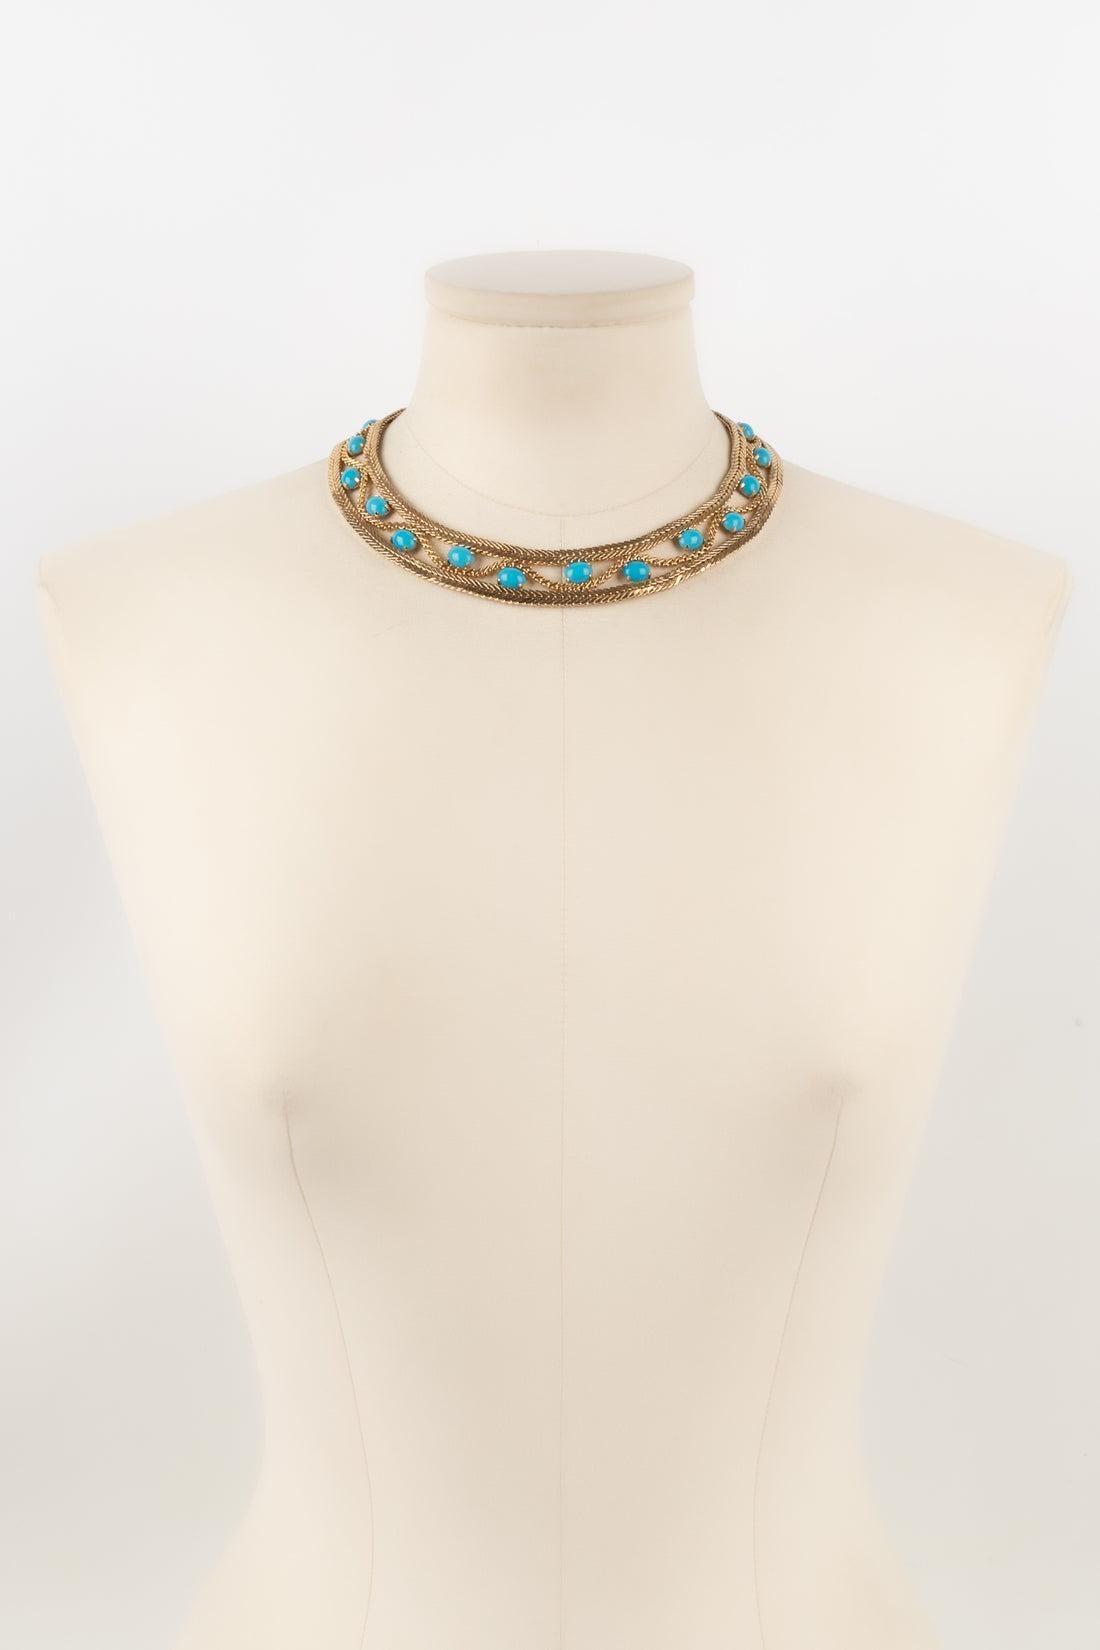 Christian Dior Golden Metal Short Necklace, 1965 In Good Condition For Sale In SAINT-OUEN-SUR-SEINE, FR